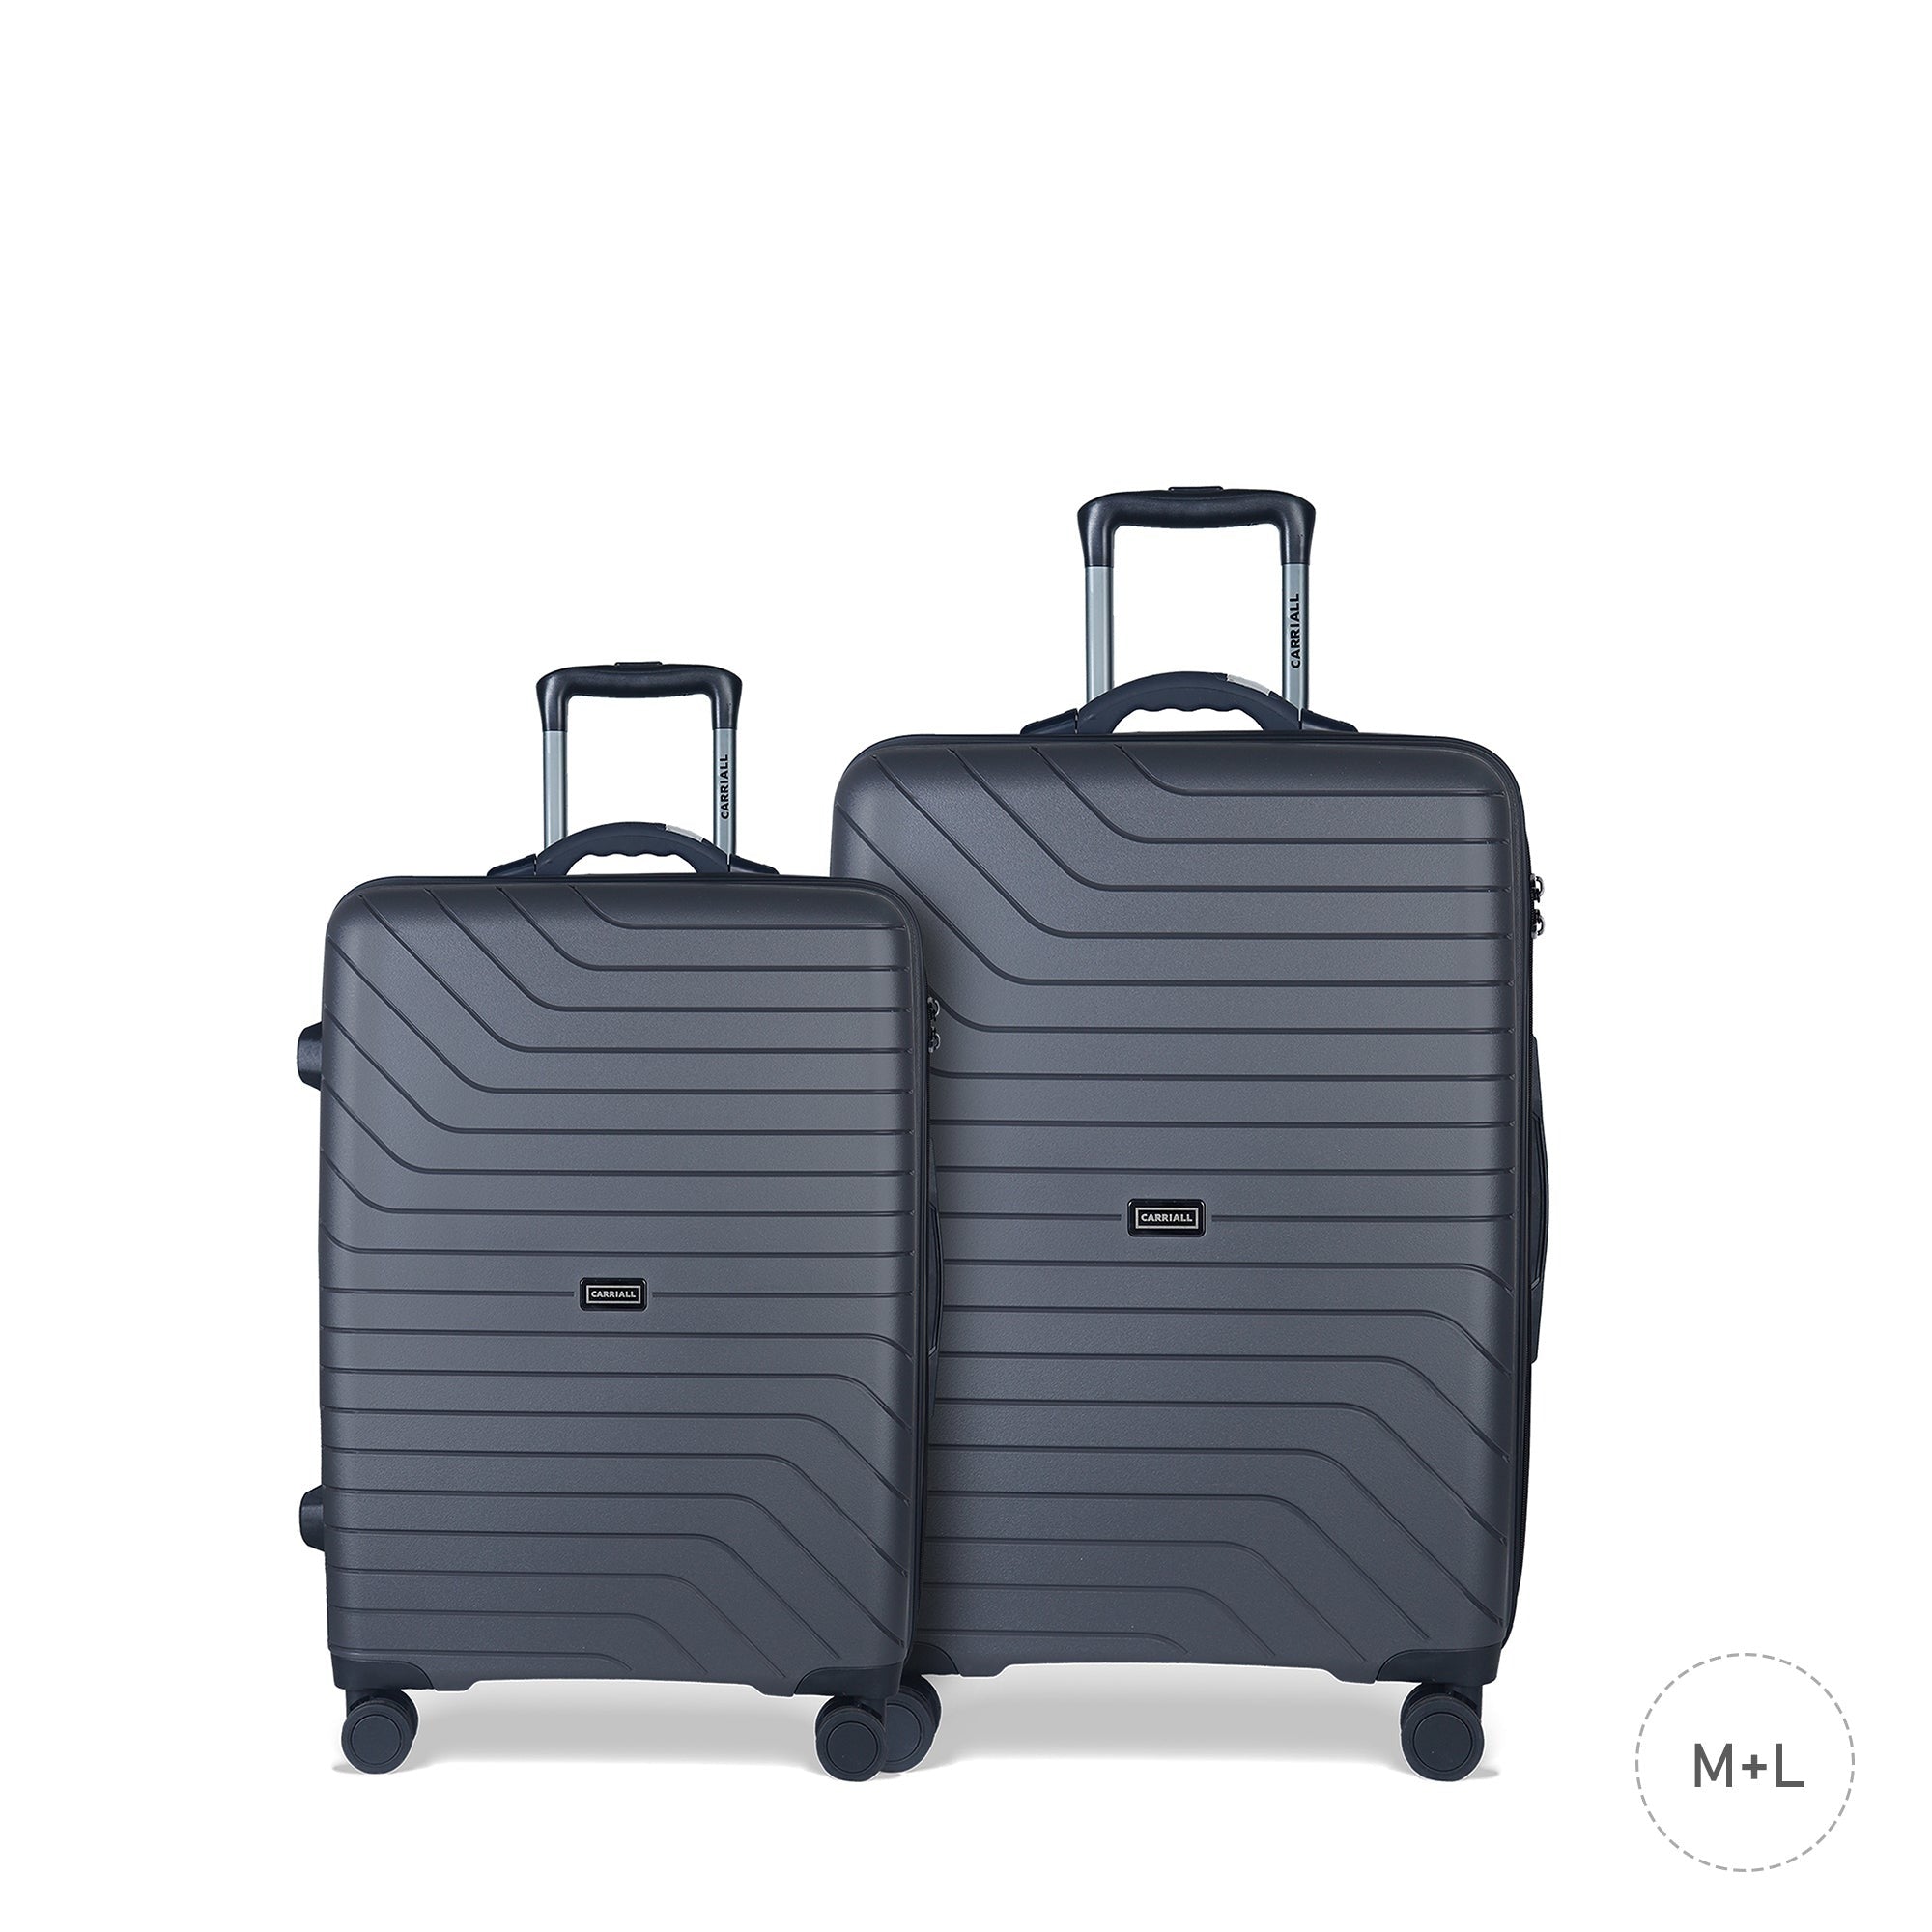 Groove Smart Luggage set of 2